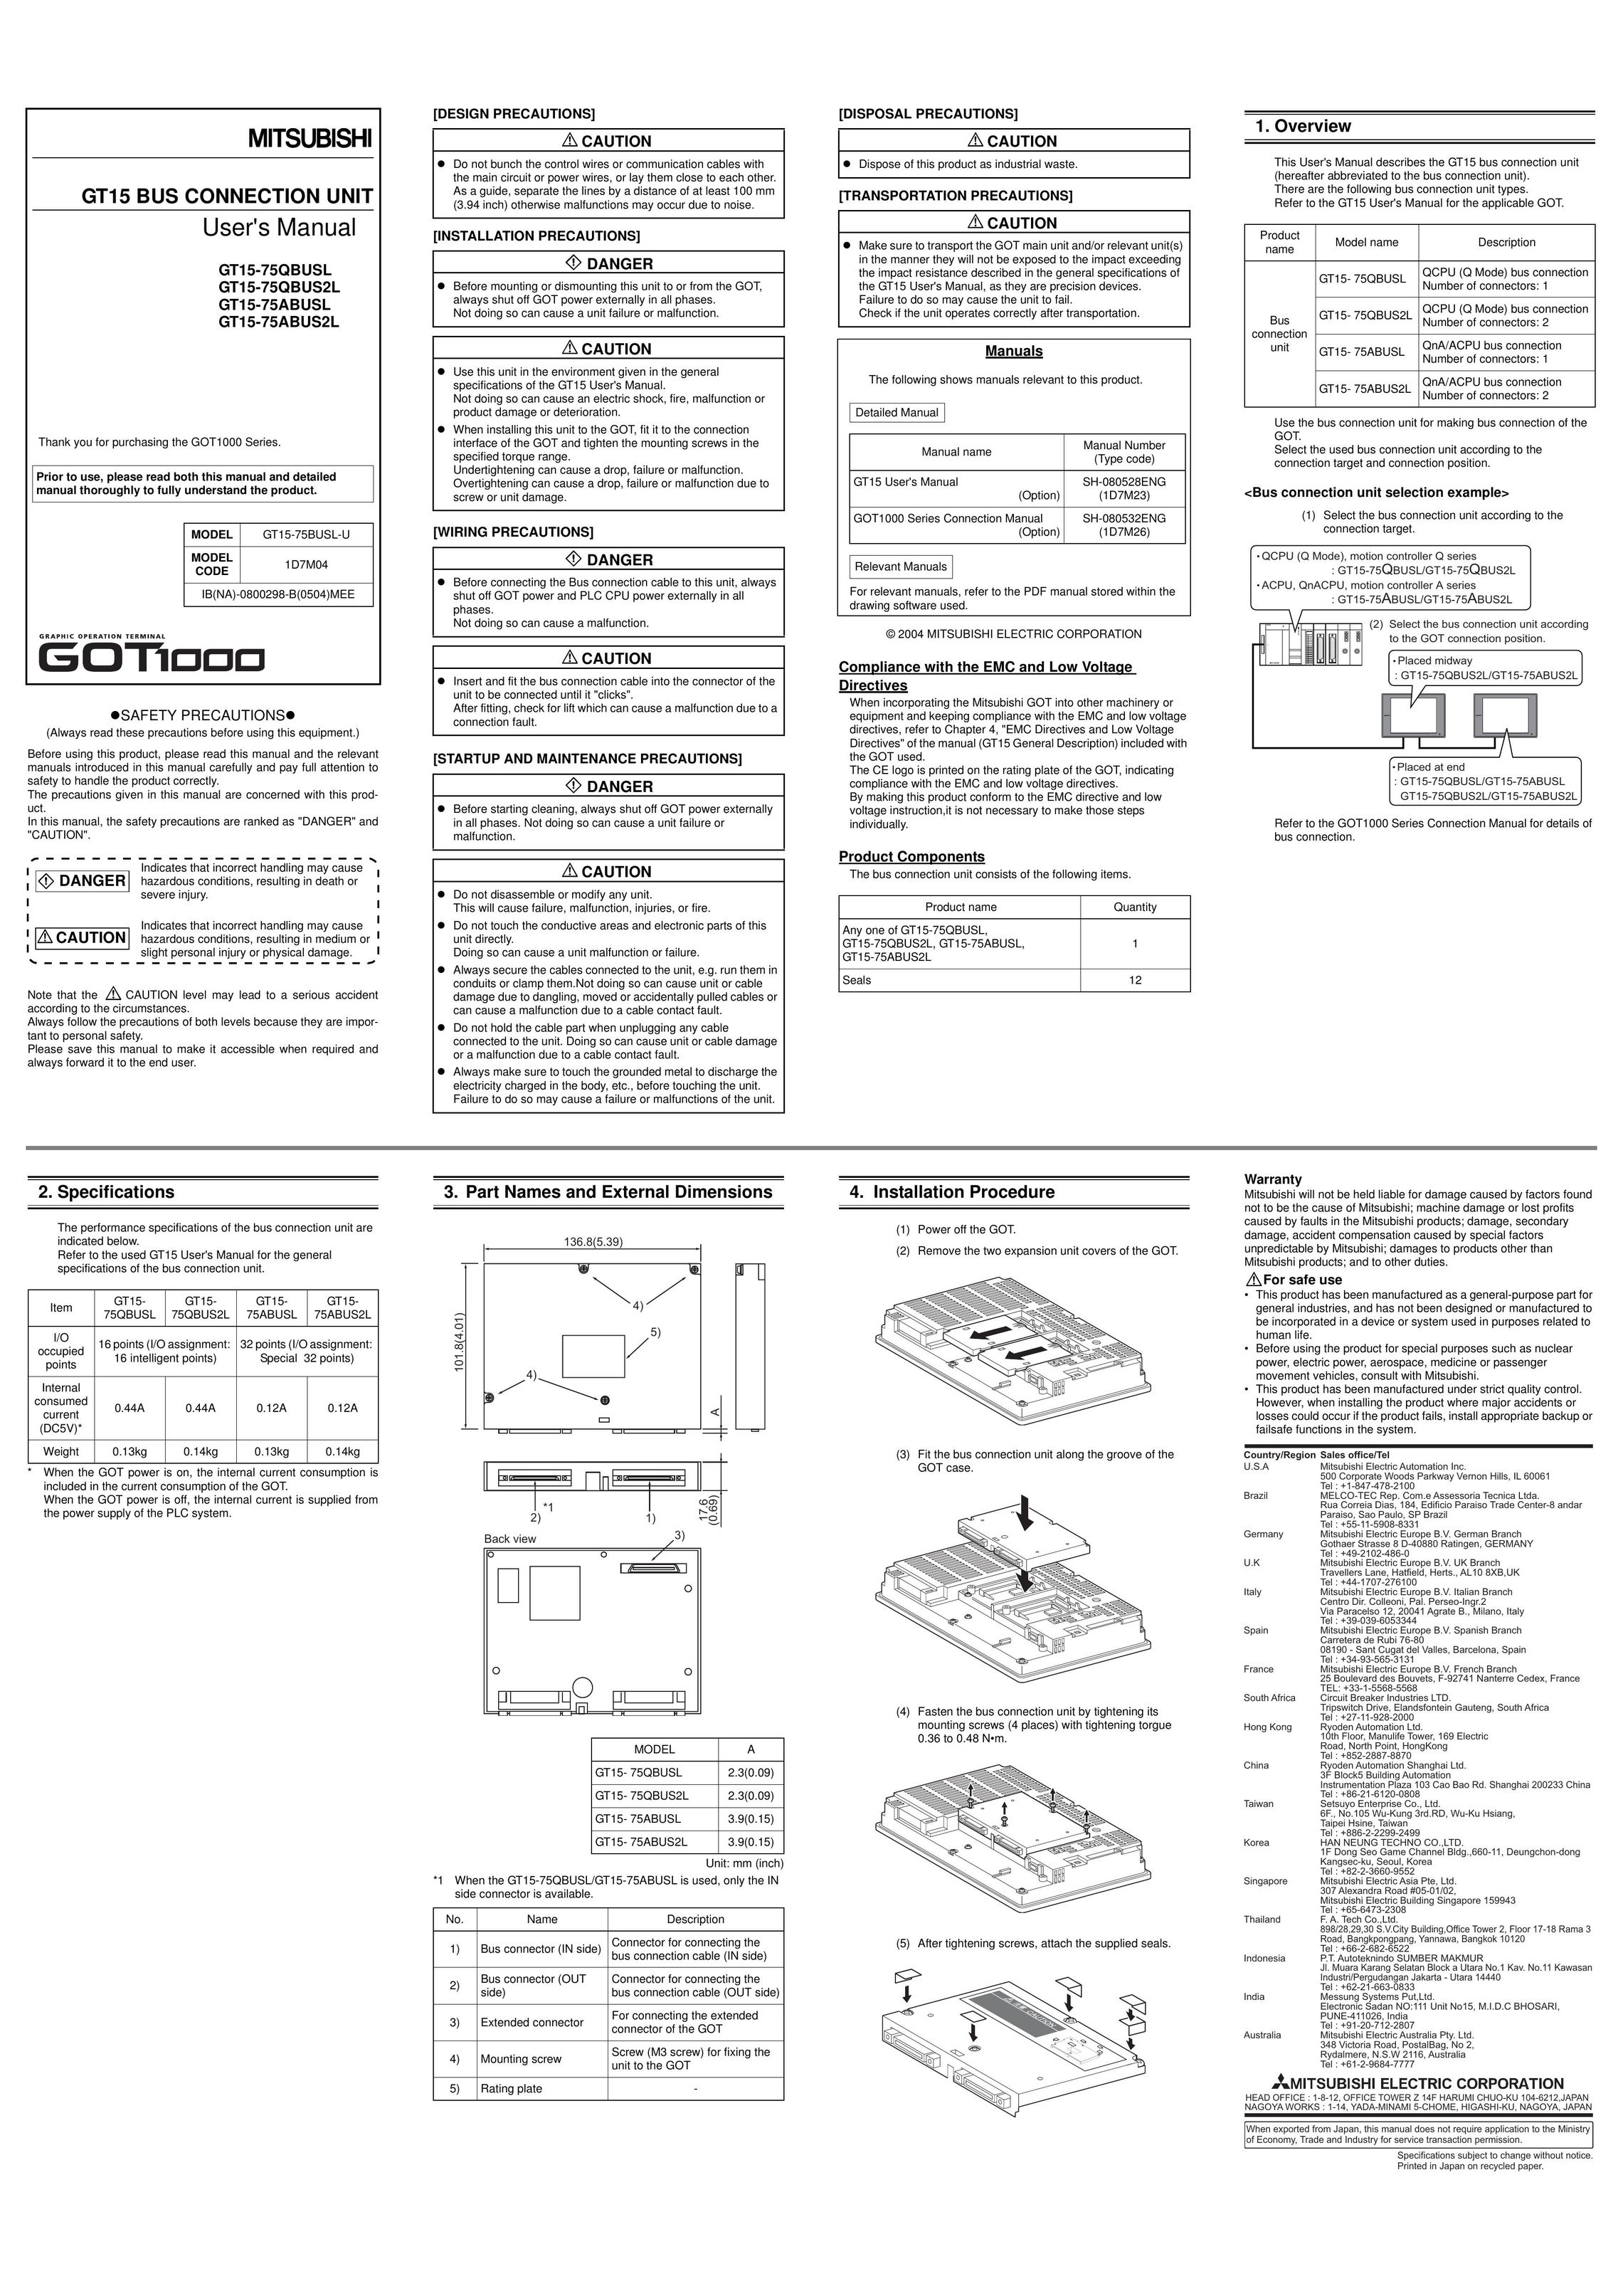 Mitsubishi Electronics GT15-75QBUSL Computer Hardware User Manual